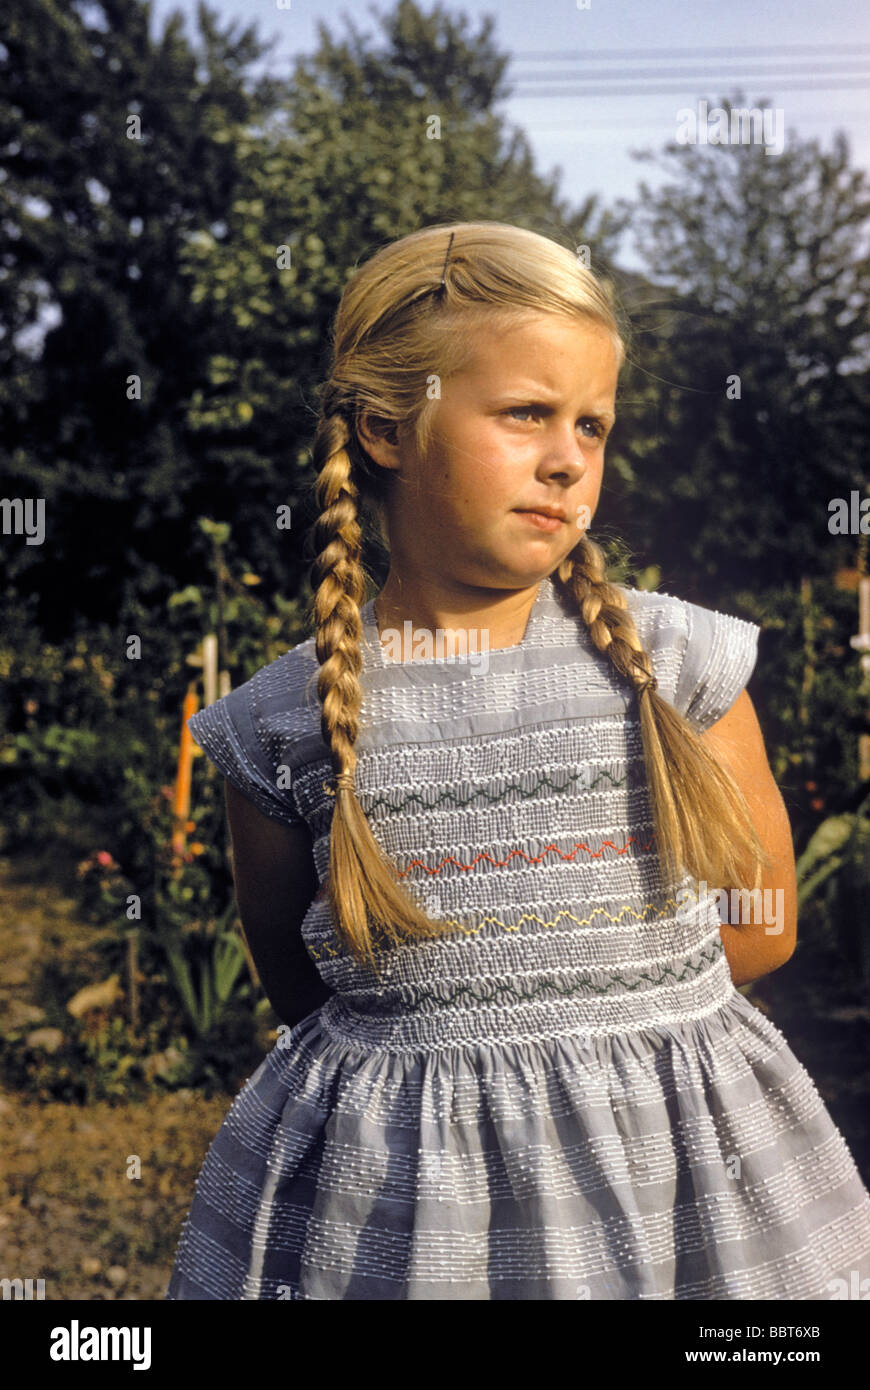 The 1950s child Stock Photo